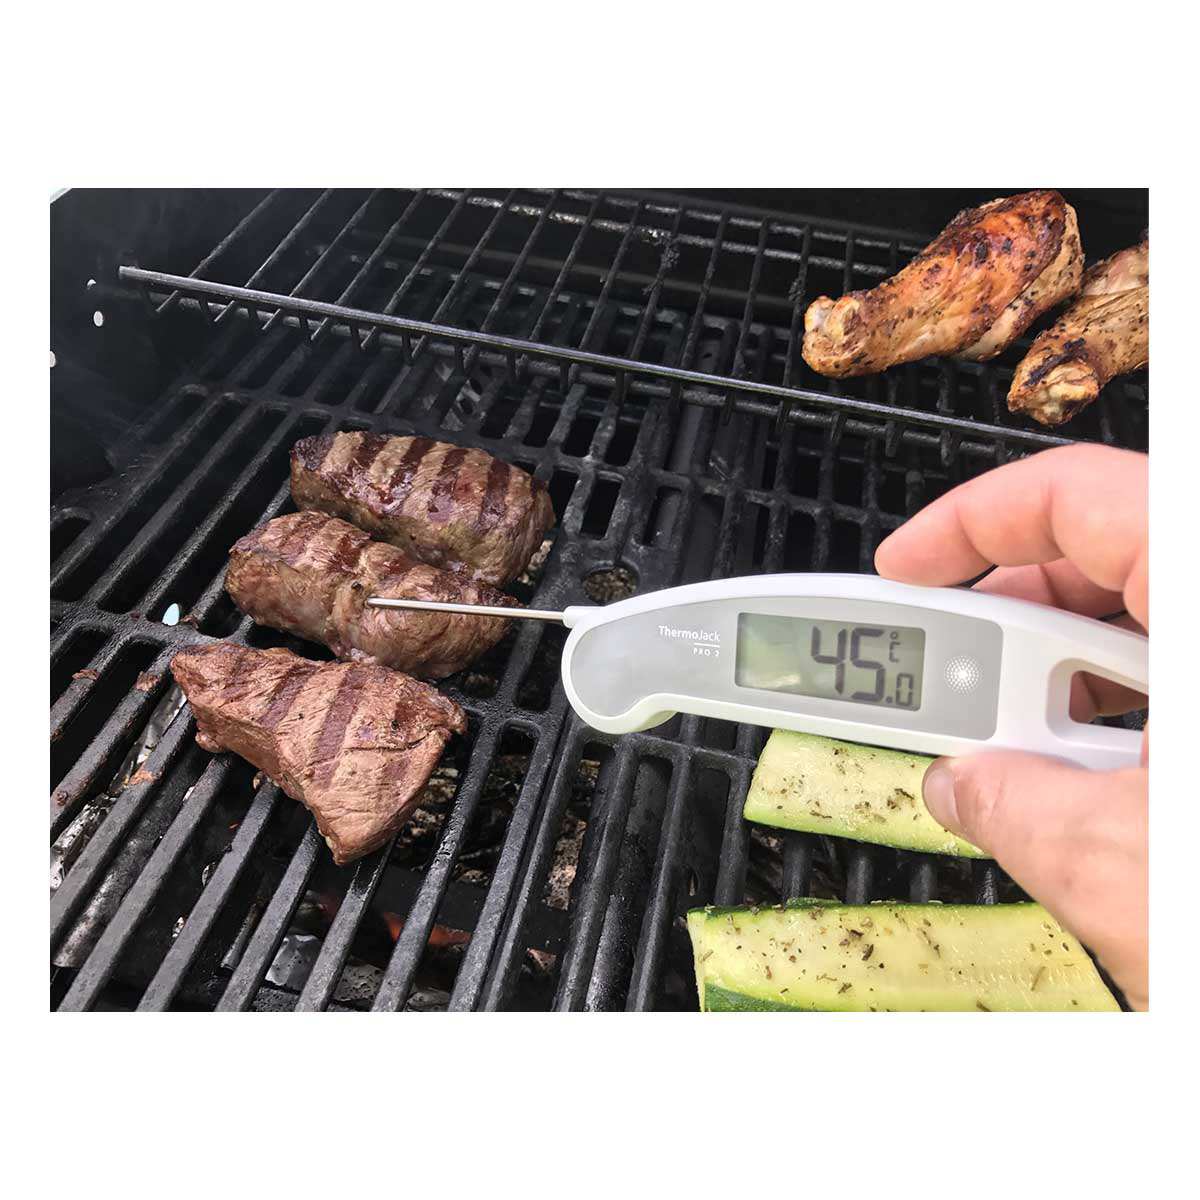 30-1060-02-profi-küchenthermometer-thermo-jack-gourmet-anwendung1-1200x1200px.jpg